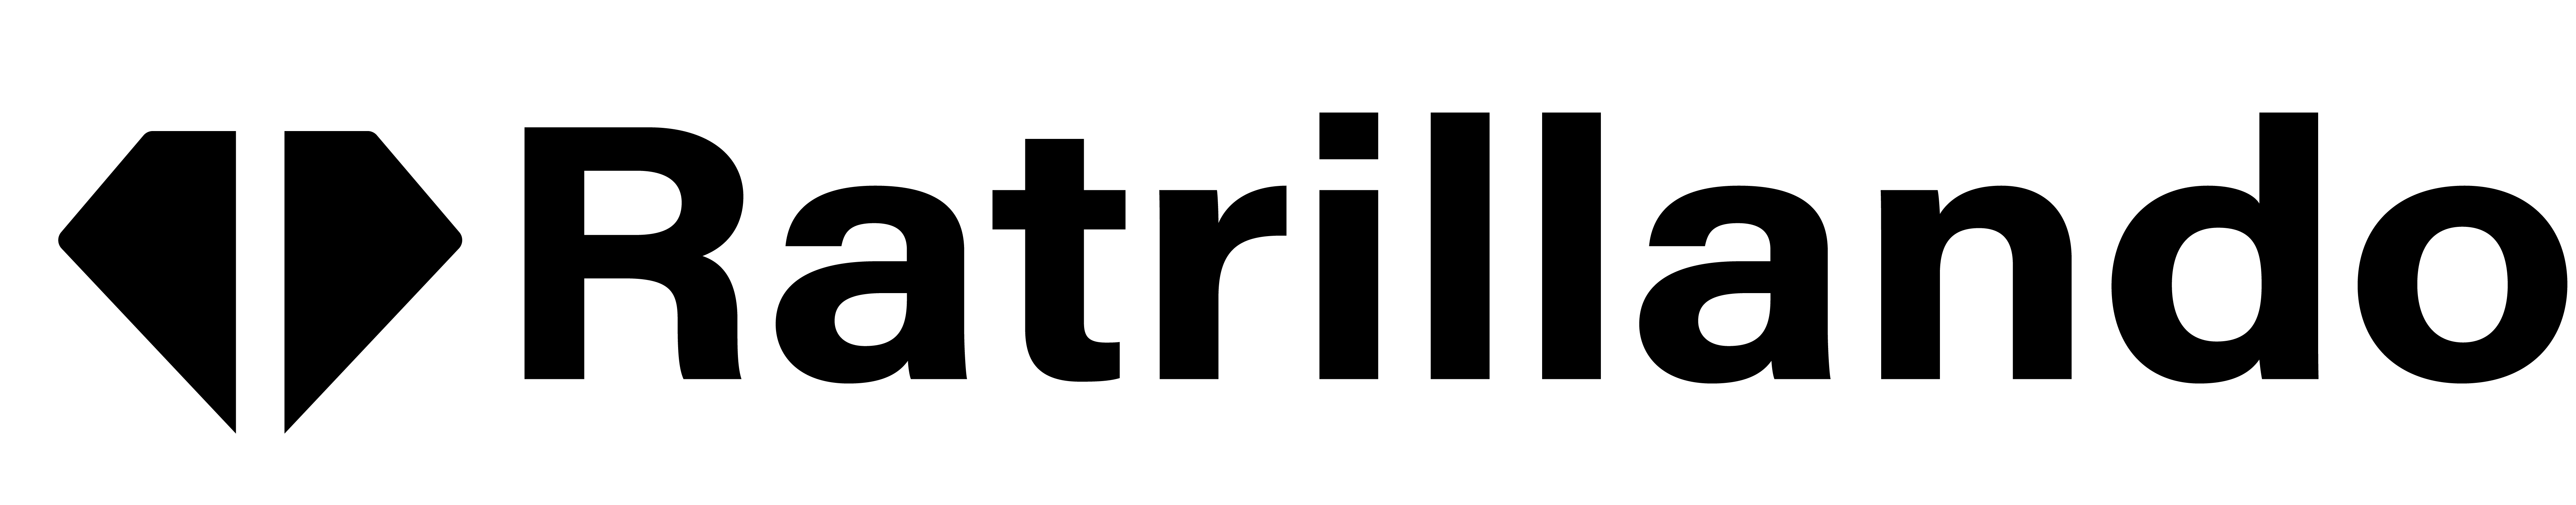 White Ratrillando logo